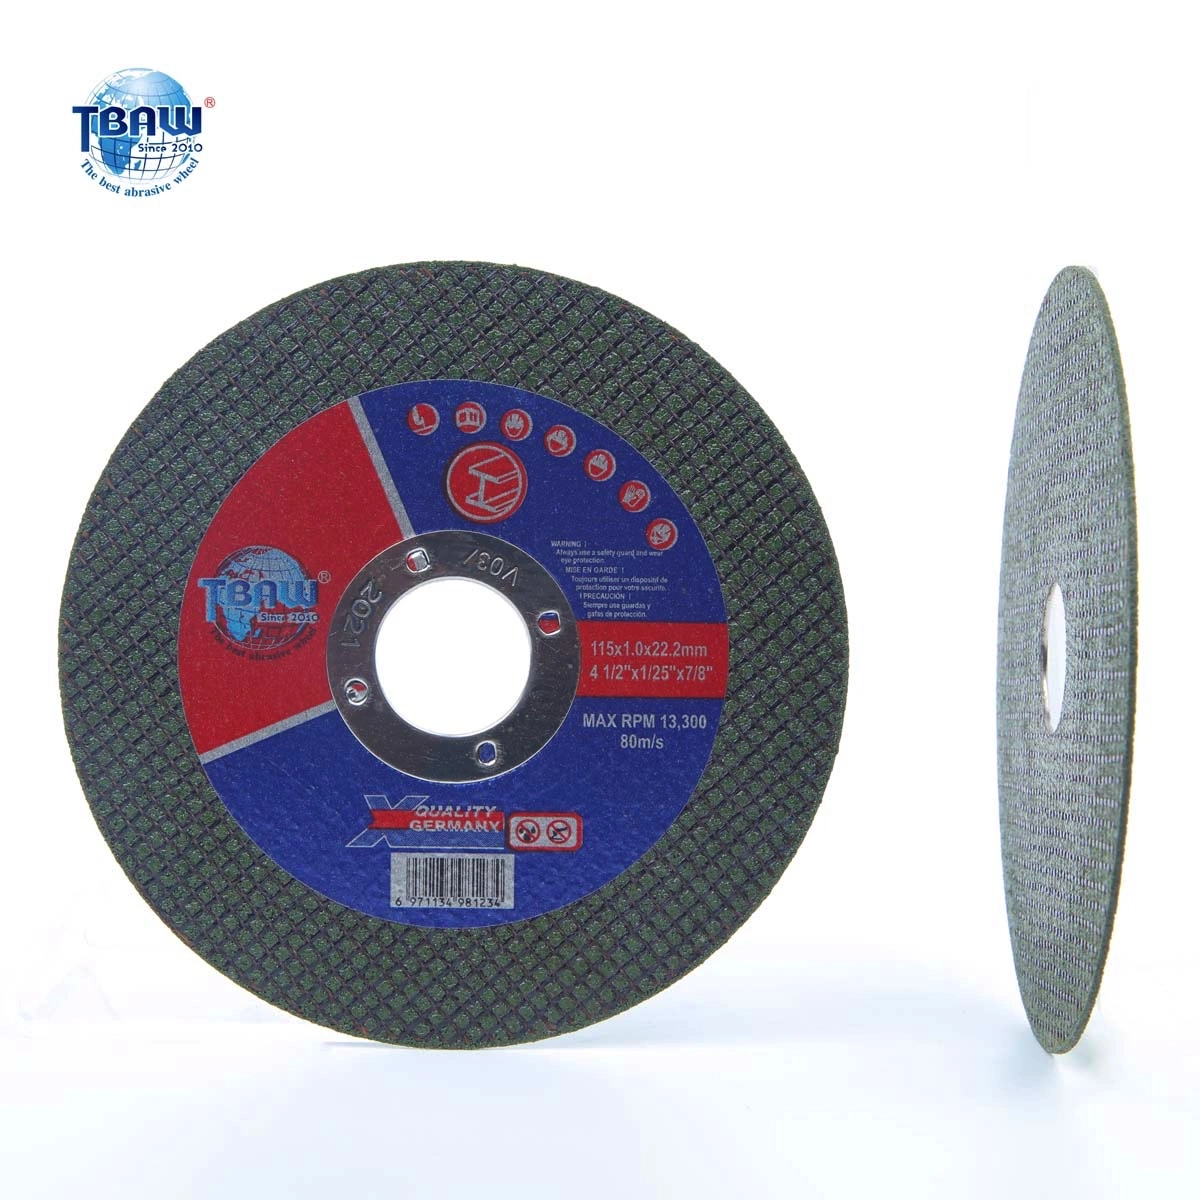 Original Factory MPa 4.5 Inch Abrasive Grinding Polishing Flap Cut off Disk Cutting Wheel